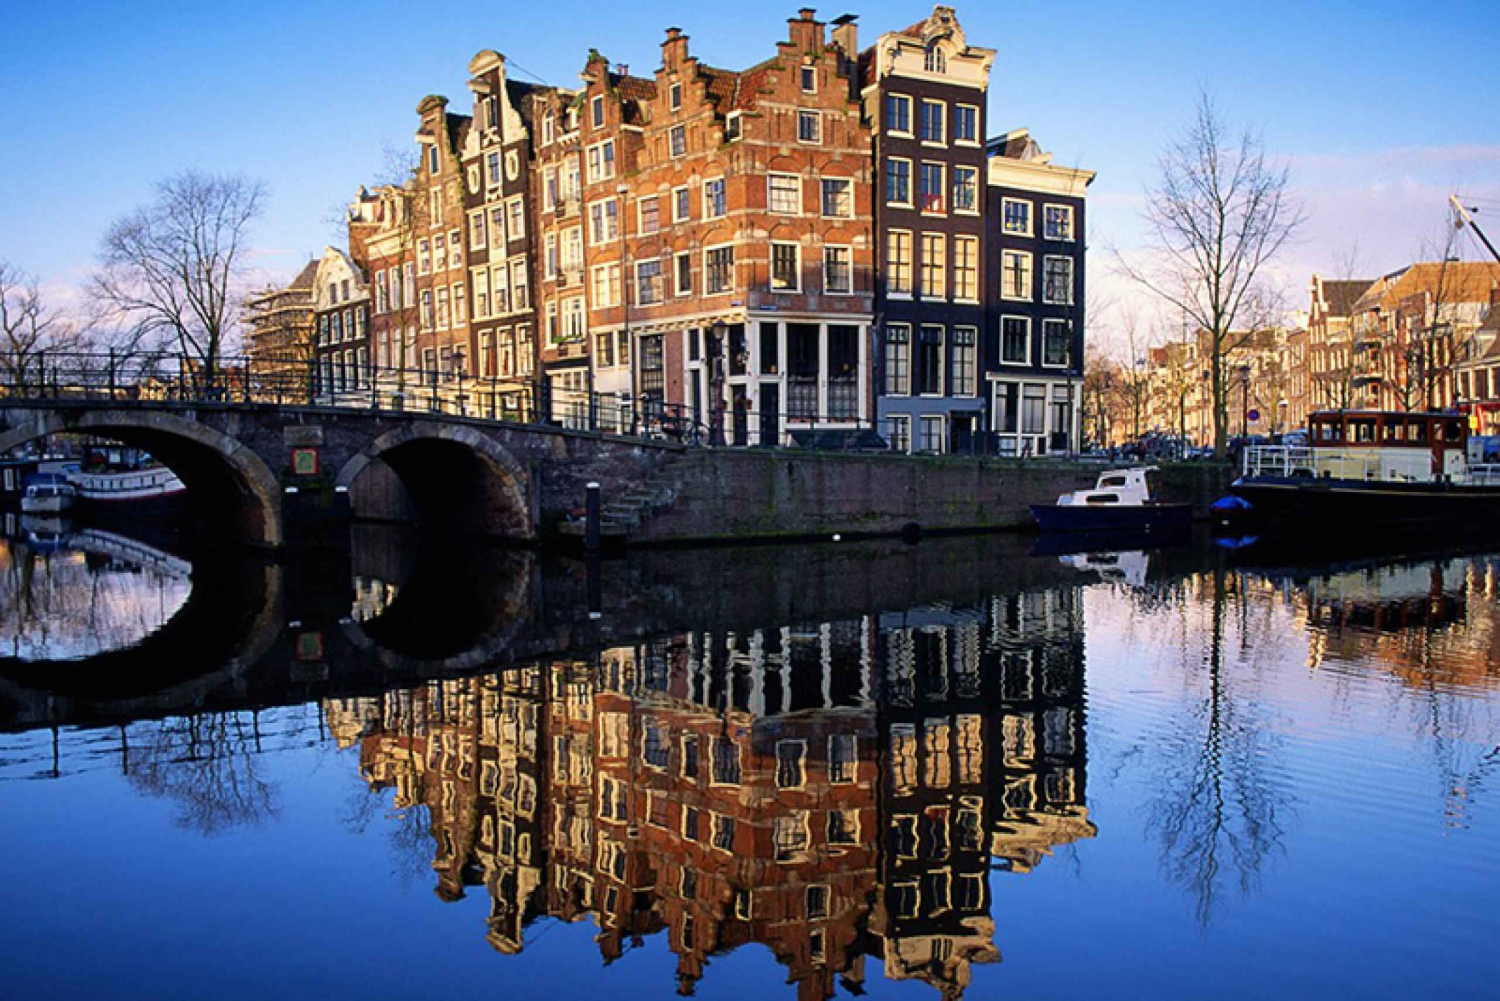 Amsterdam City Private Orientation Walking Tour